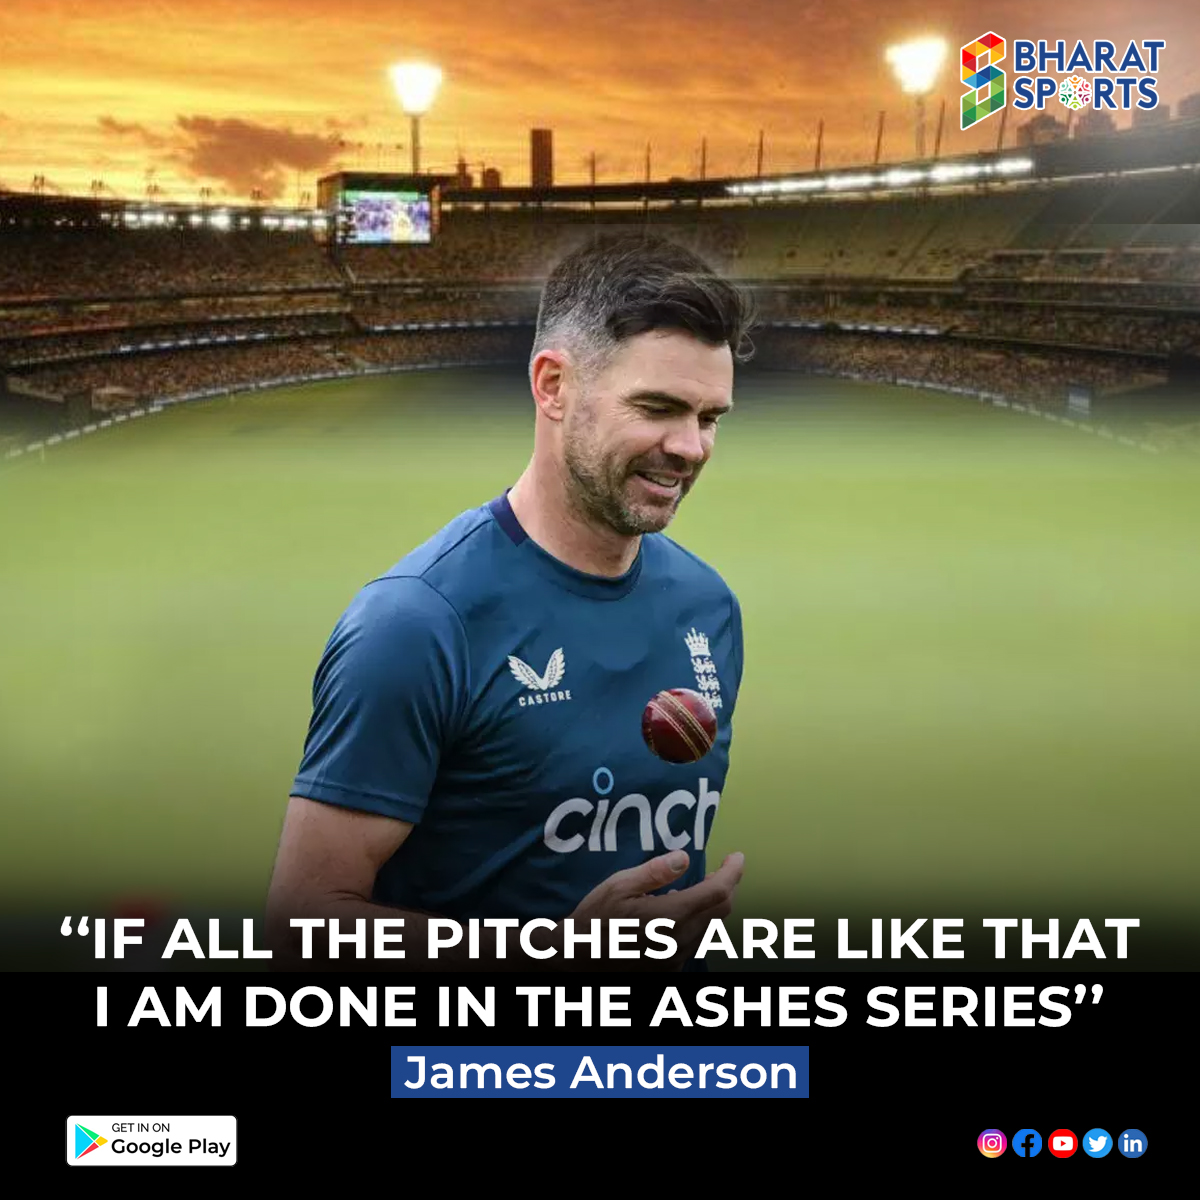 James Anderson wasn't a big fan of the Edgbaston pitch for the first Ashes Test.

#bharatsports #England #ENGvSAUS #TheAshes #JamesAnderson #cricket #cricketnews #T20 #T20Blast #AshesTest #englandcricketer #pitch #bigfans #testcricket #Edgbaston